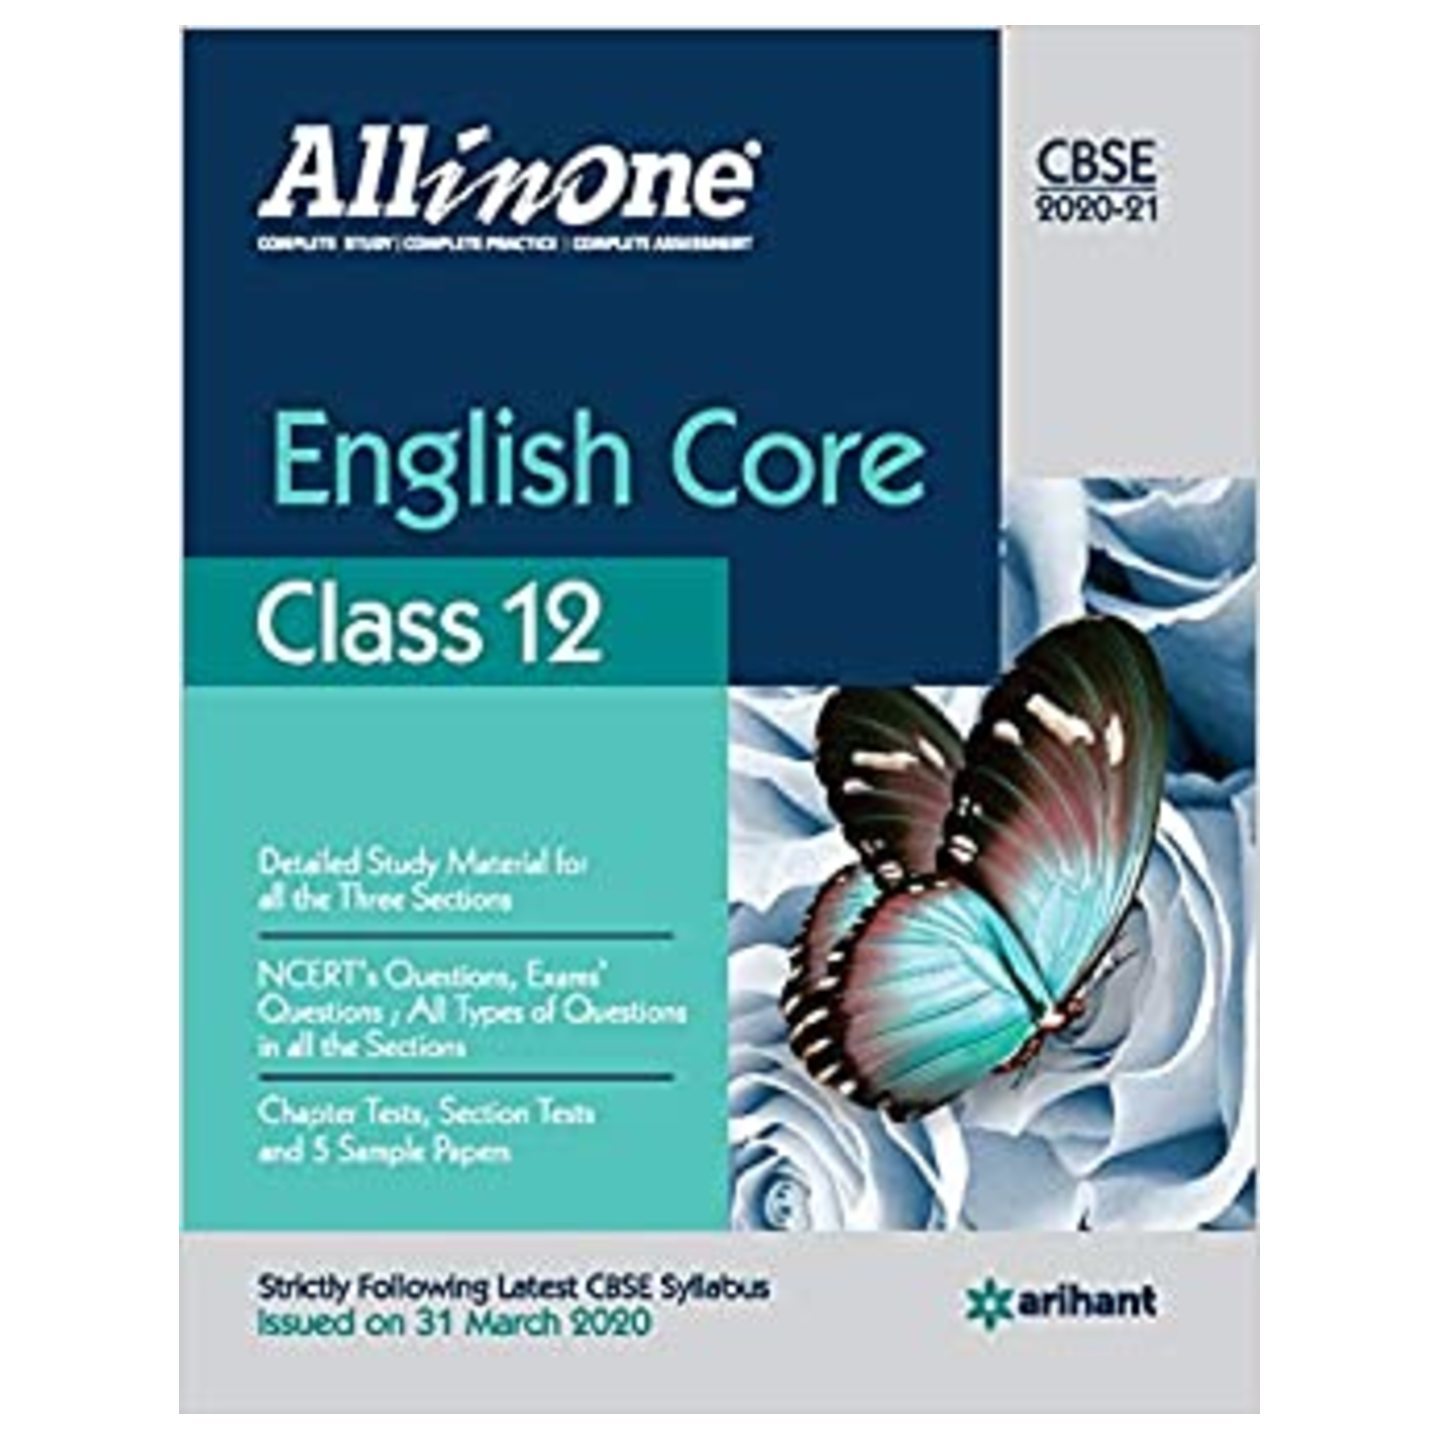 CBSE All In One English Core Class 12 ARIHANT